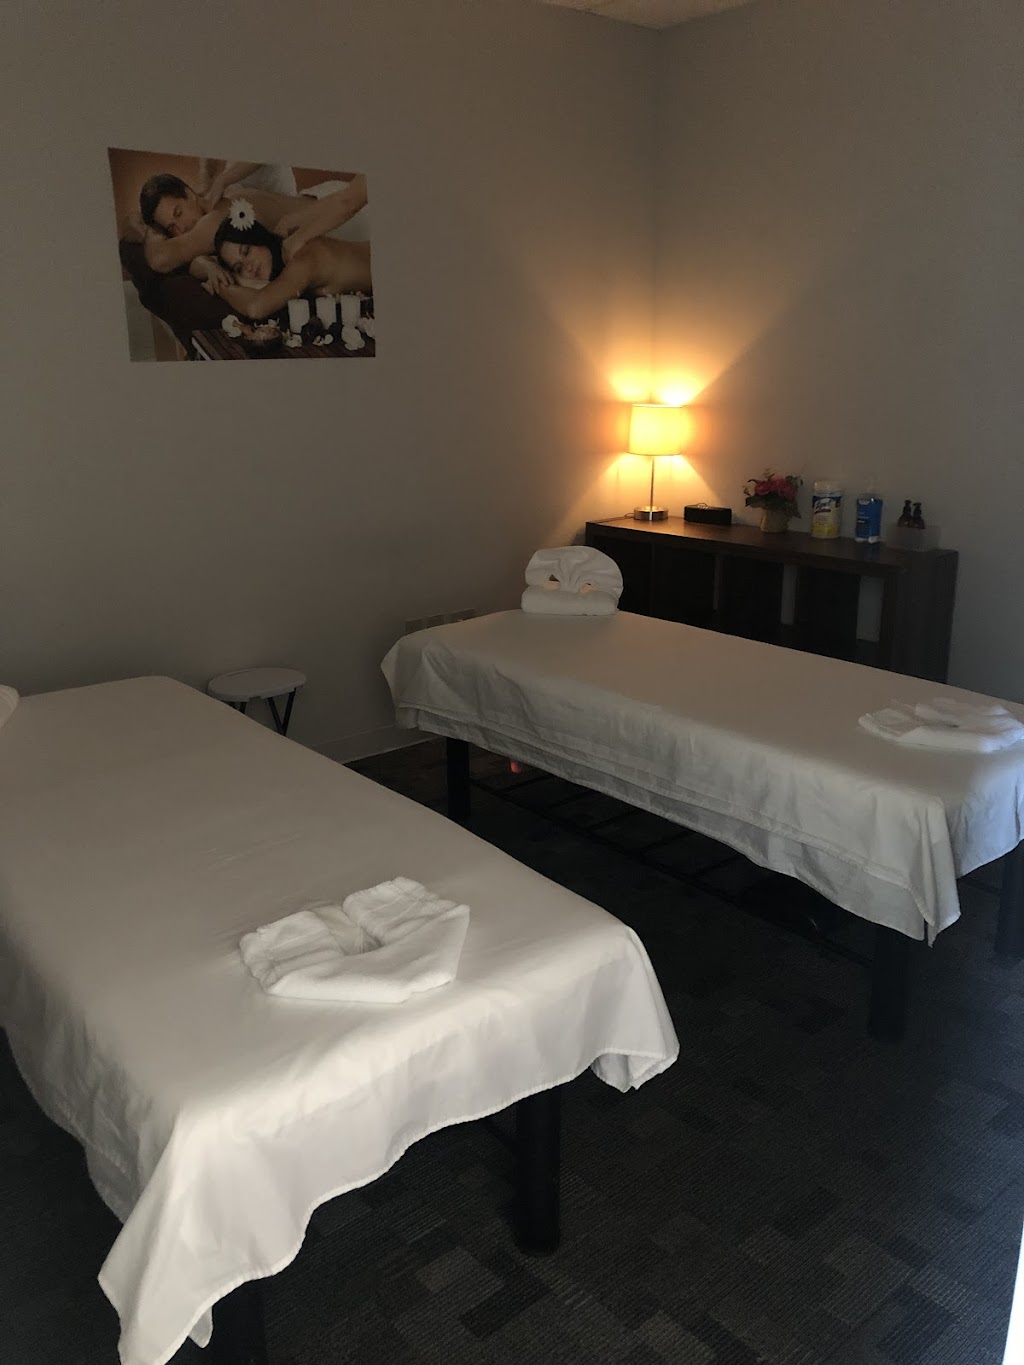 Peaceful Massage Spa - spa  | Photo 1 of 9 | Address: 6033 Telegraph Rd, St. Louis, MO 63129, USA | Phone: (314) 326-5775